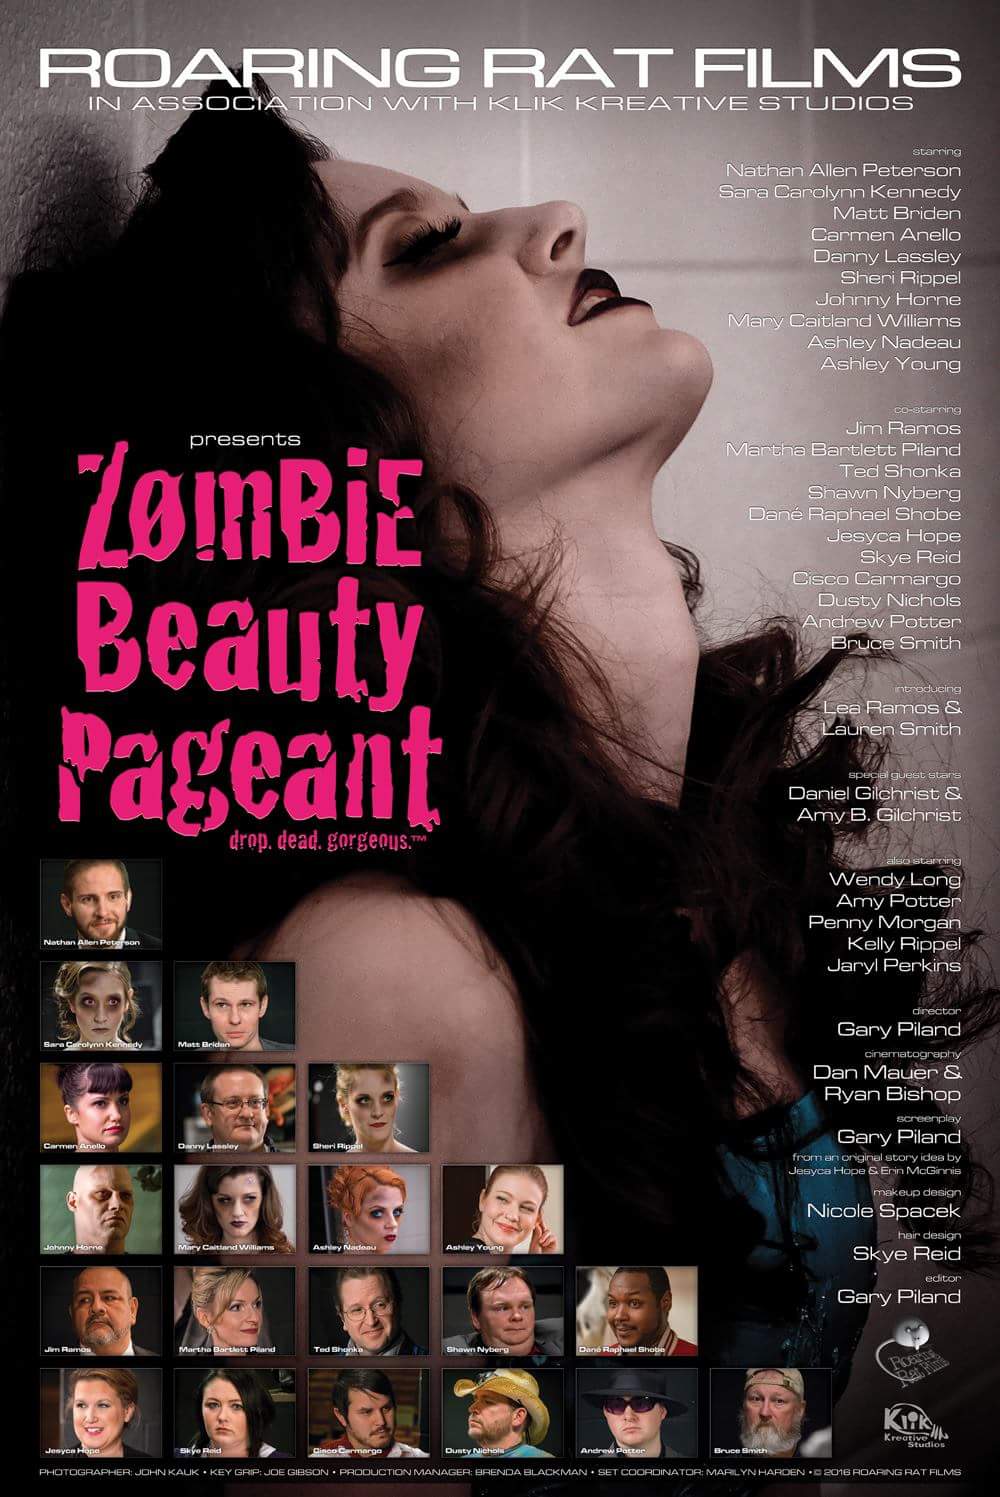 Zombie Beauty Pageant: Drop Dead Gorgeous (2018) starring Carmen Anello on DVD on DVD